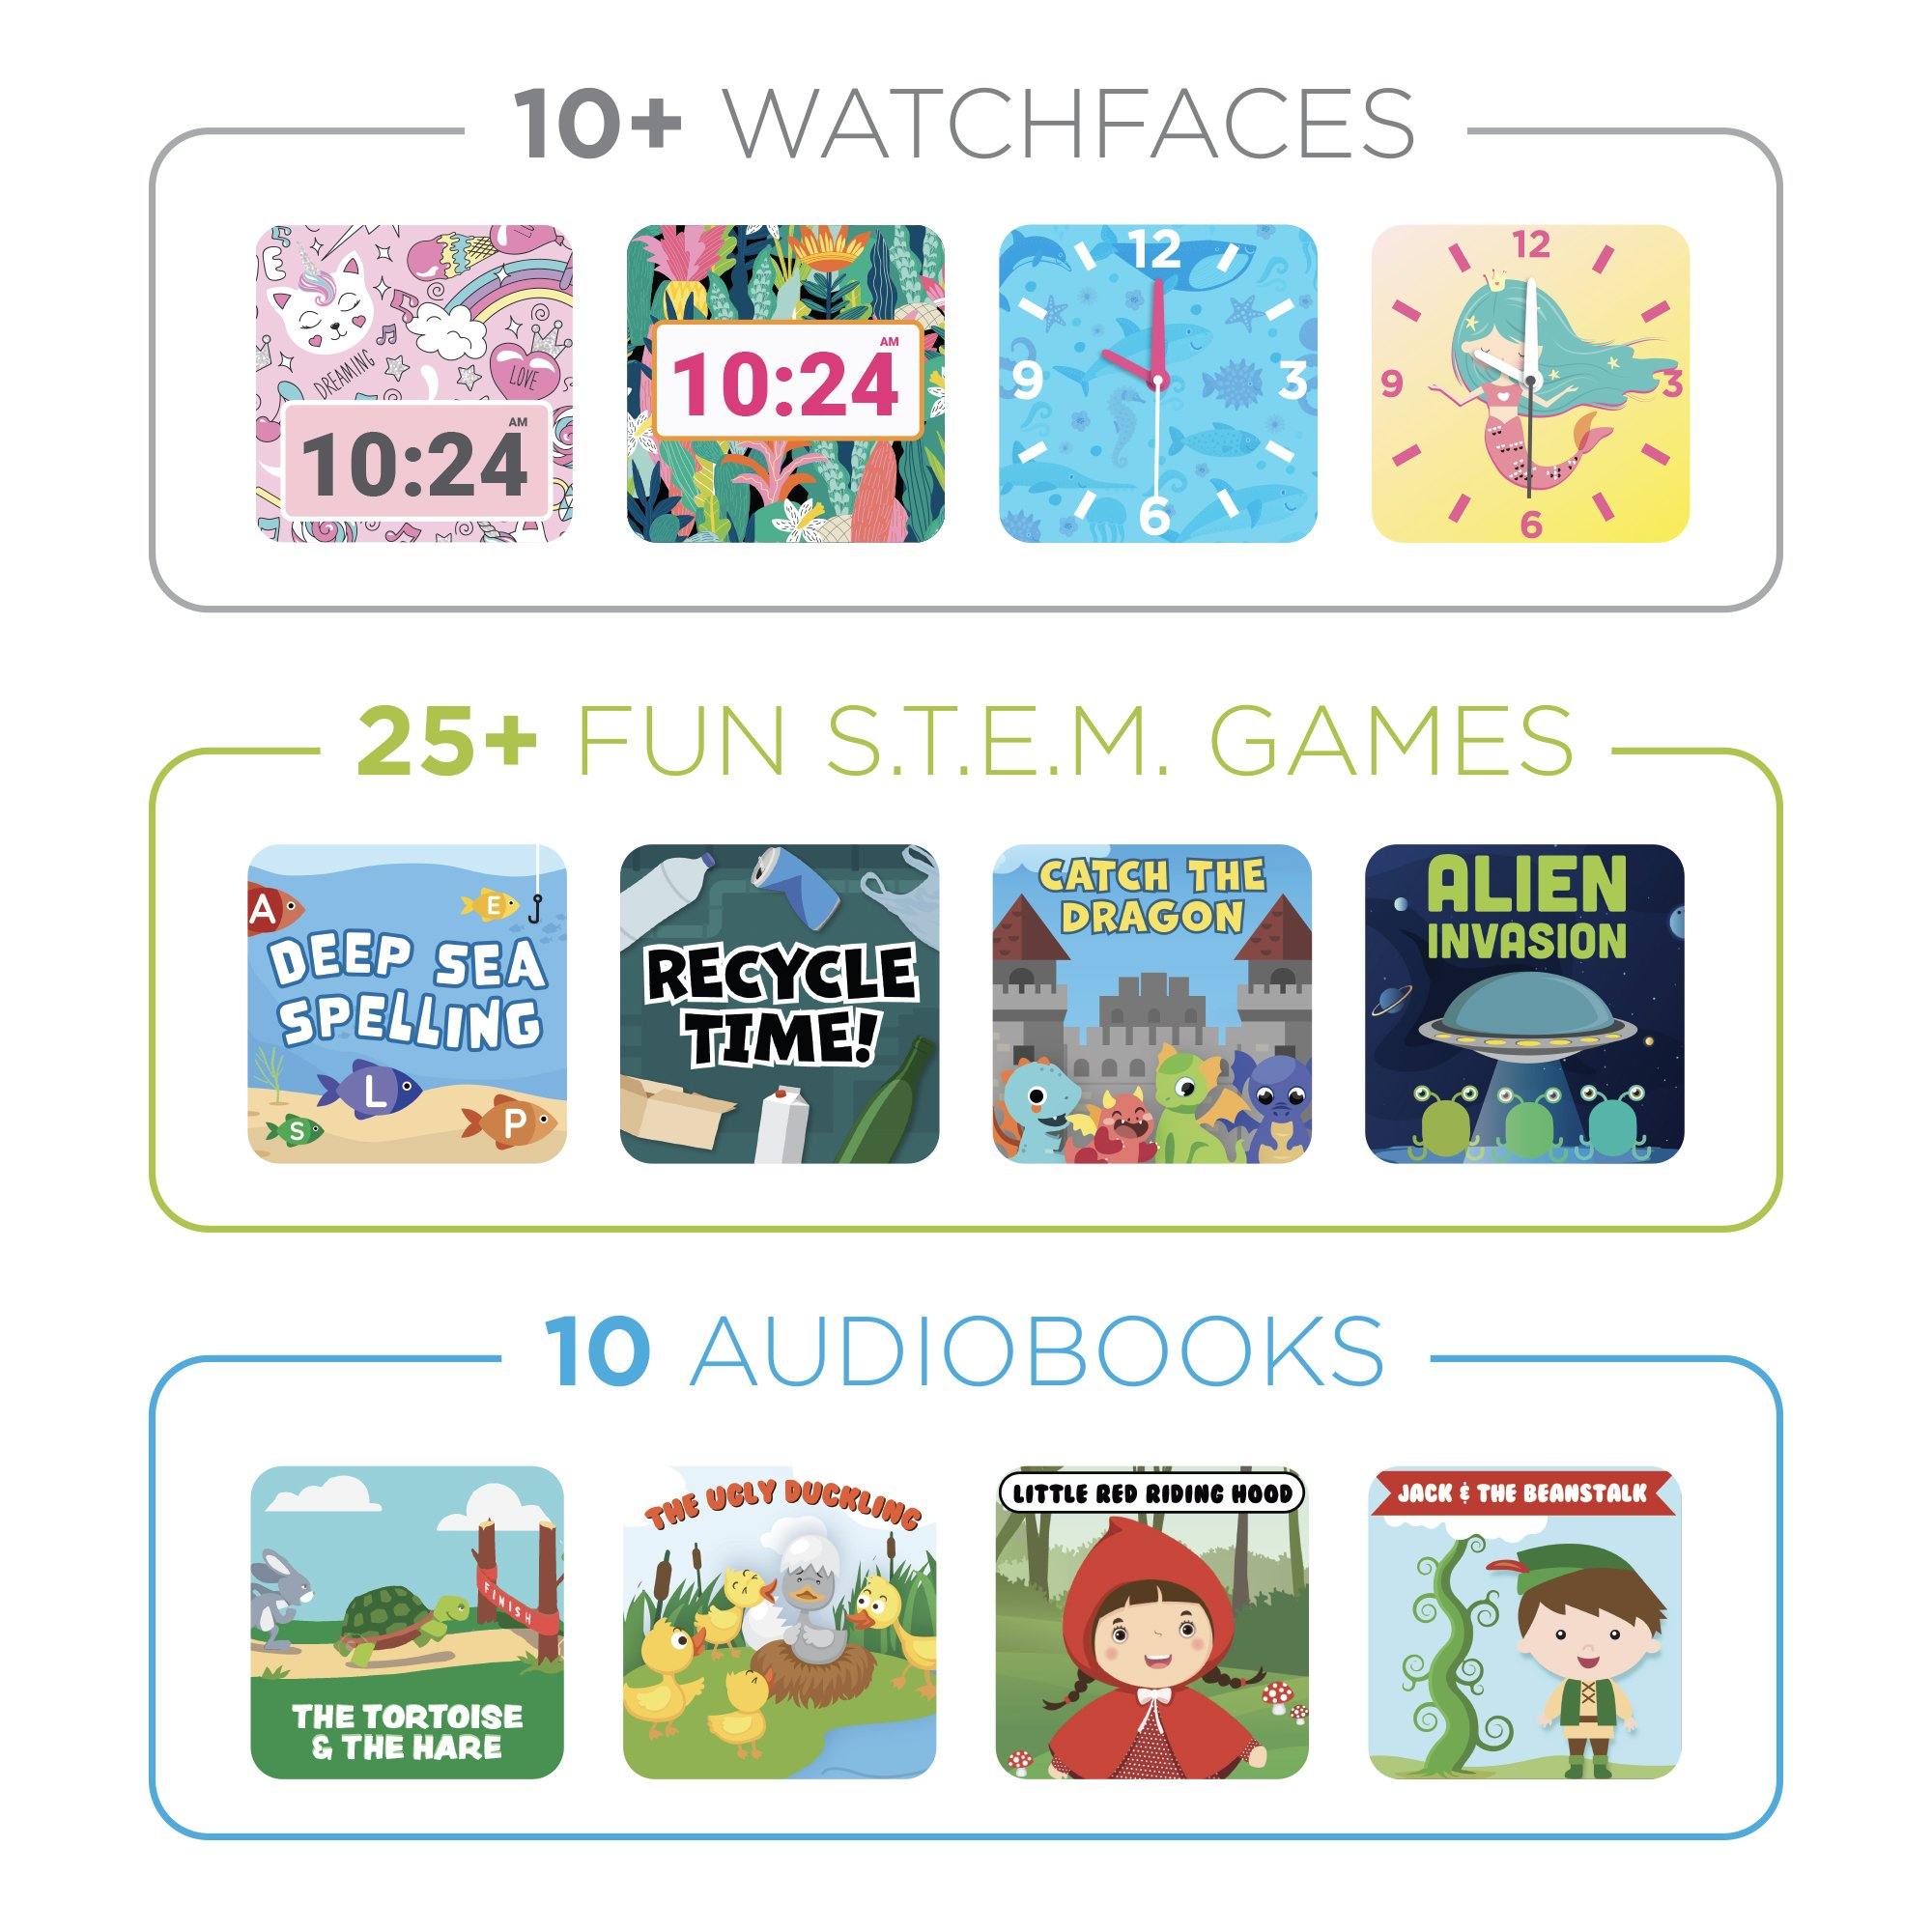 PlayZoom 2 Kids Smartwatch: Purple Butterfly Print affordable smart watch